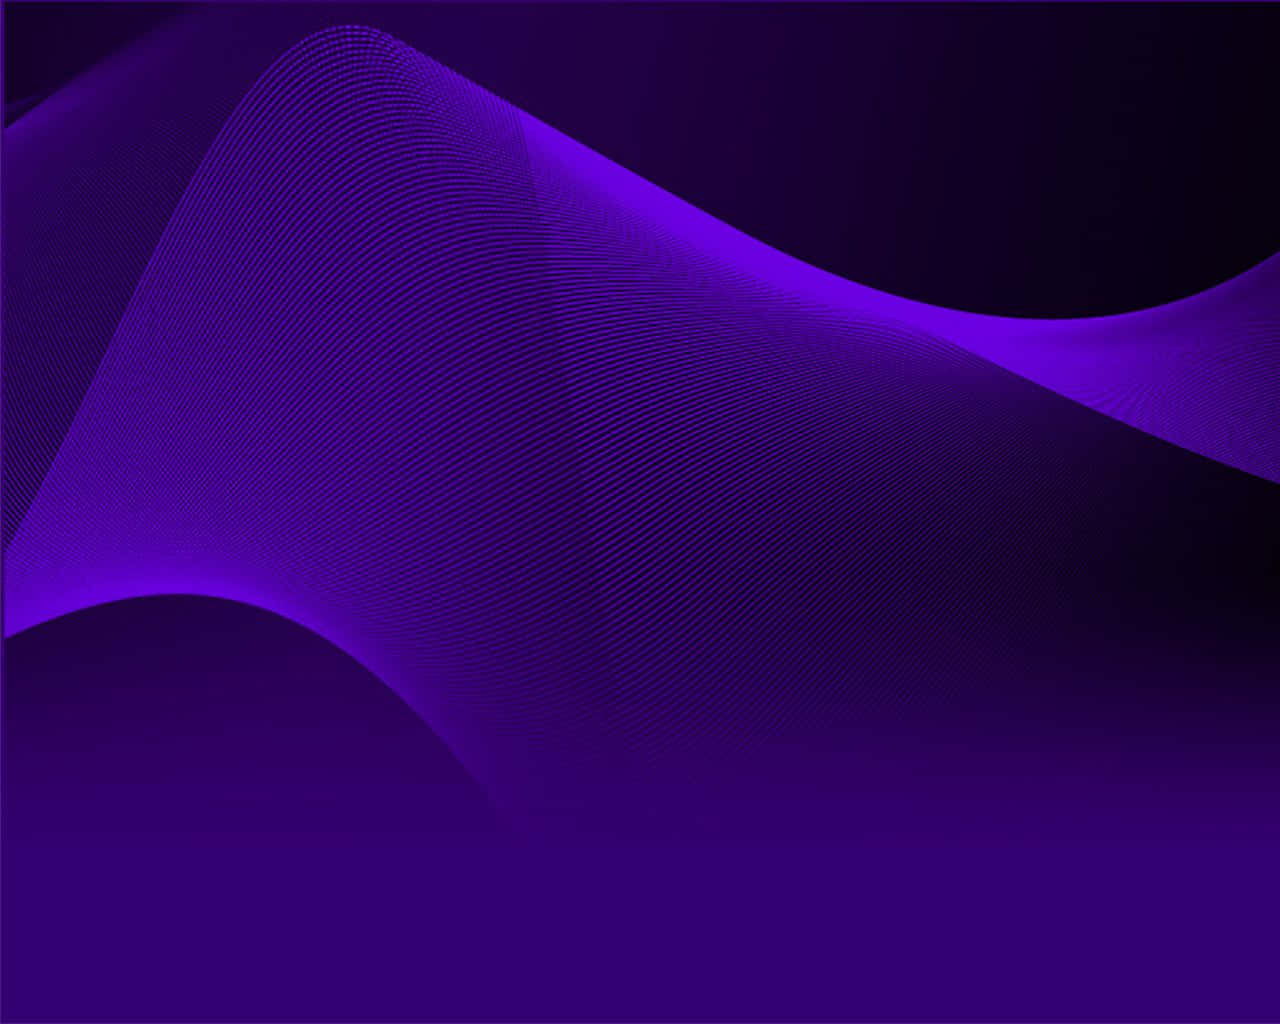 Download Ultraviolet Waves Wallpaper | Wallpapers.com